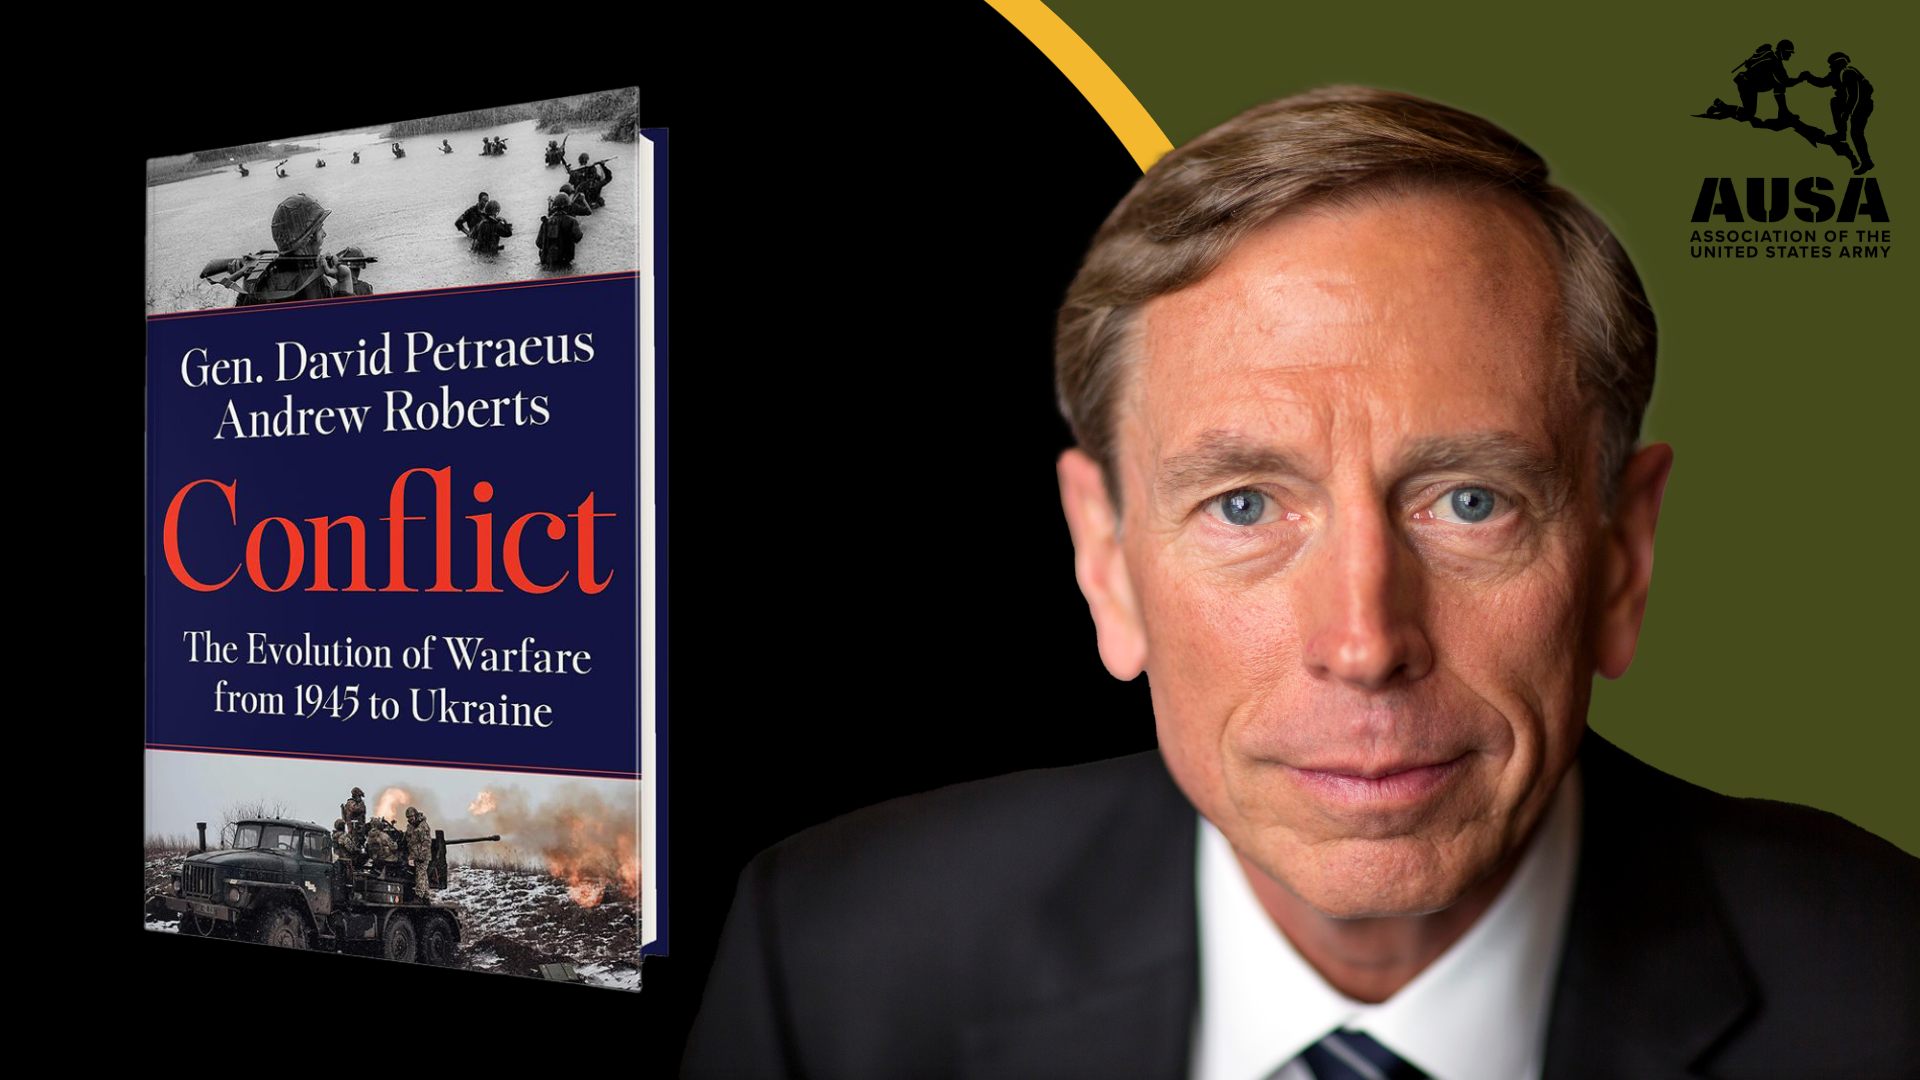 book cover and headshot of David Petraeus